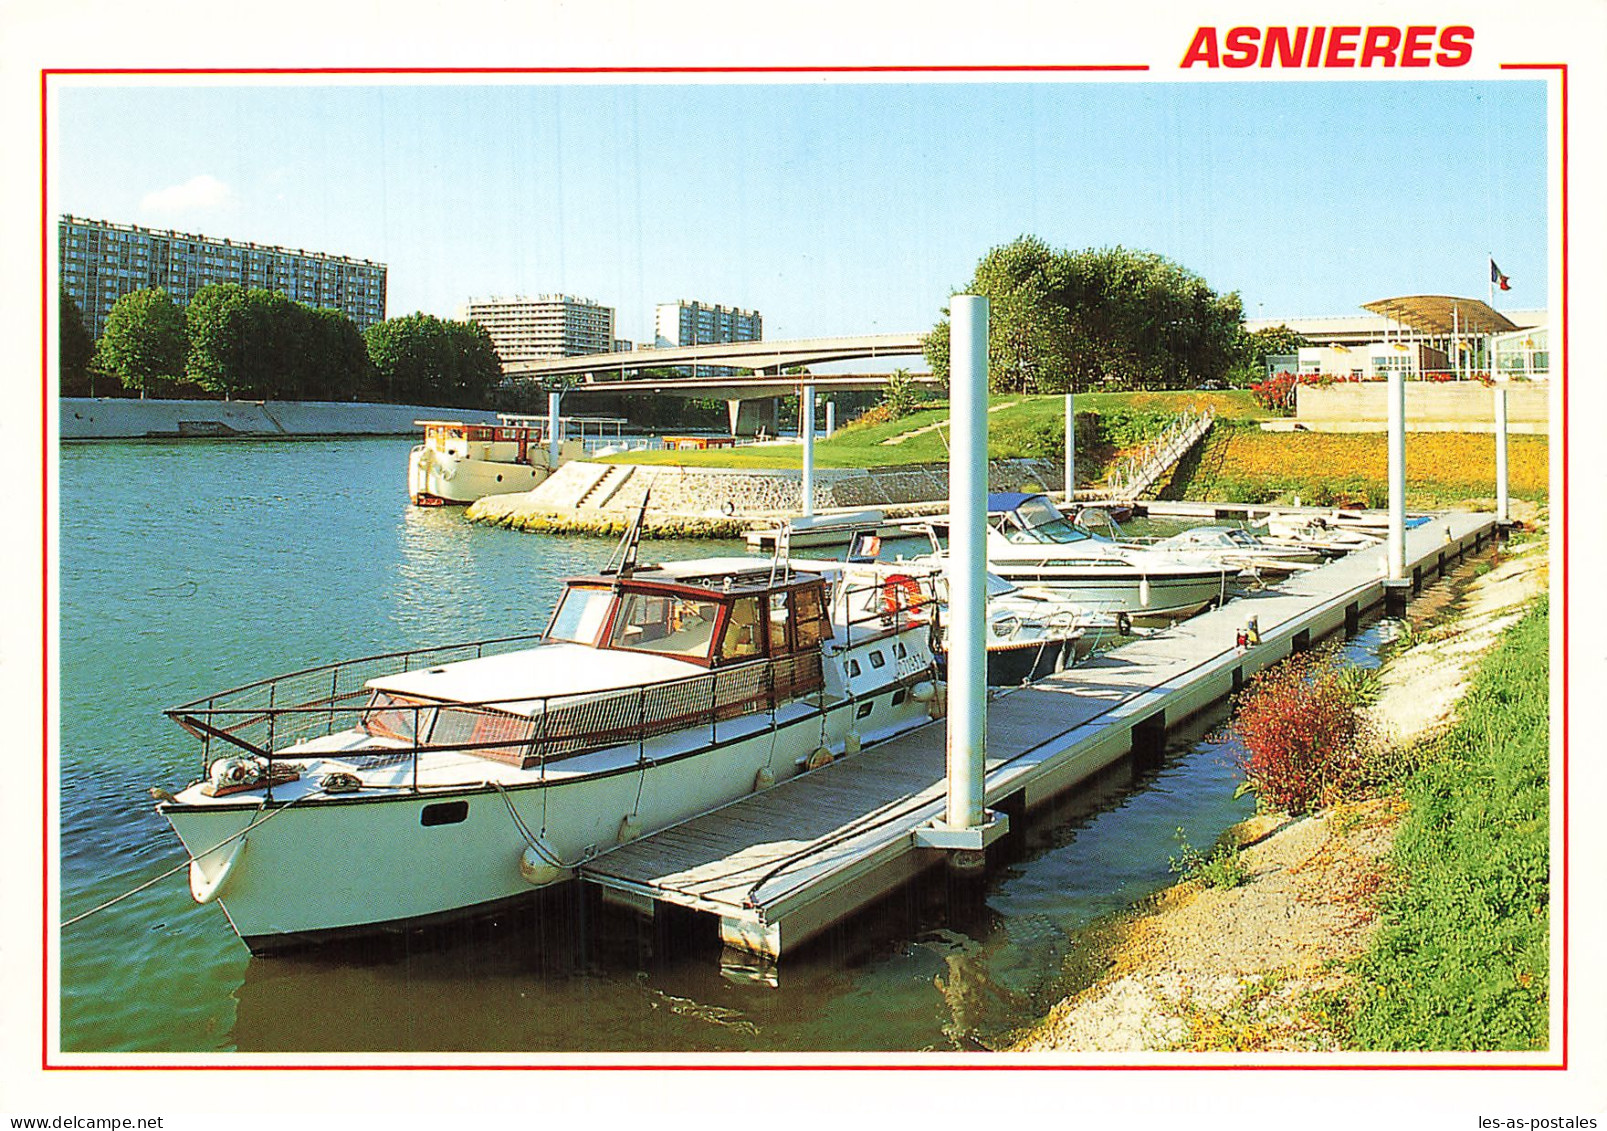 92 ASNIERES PORT VAN GOGH - Asnieres Sur Seine